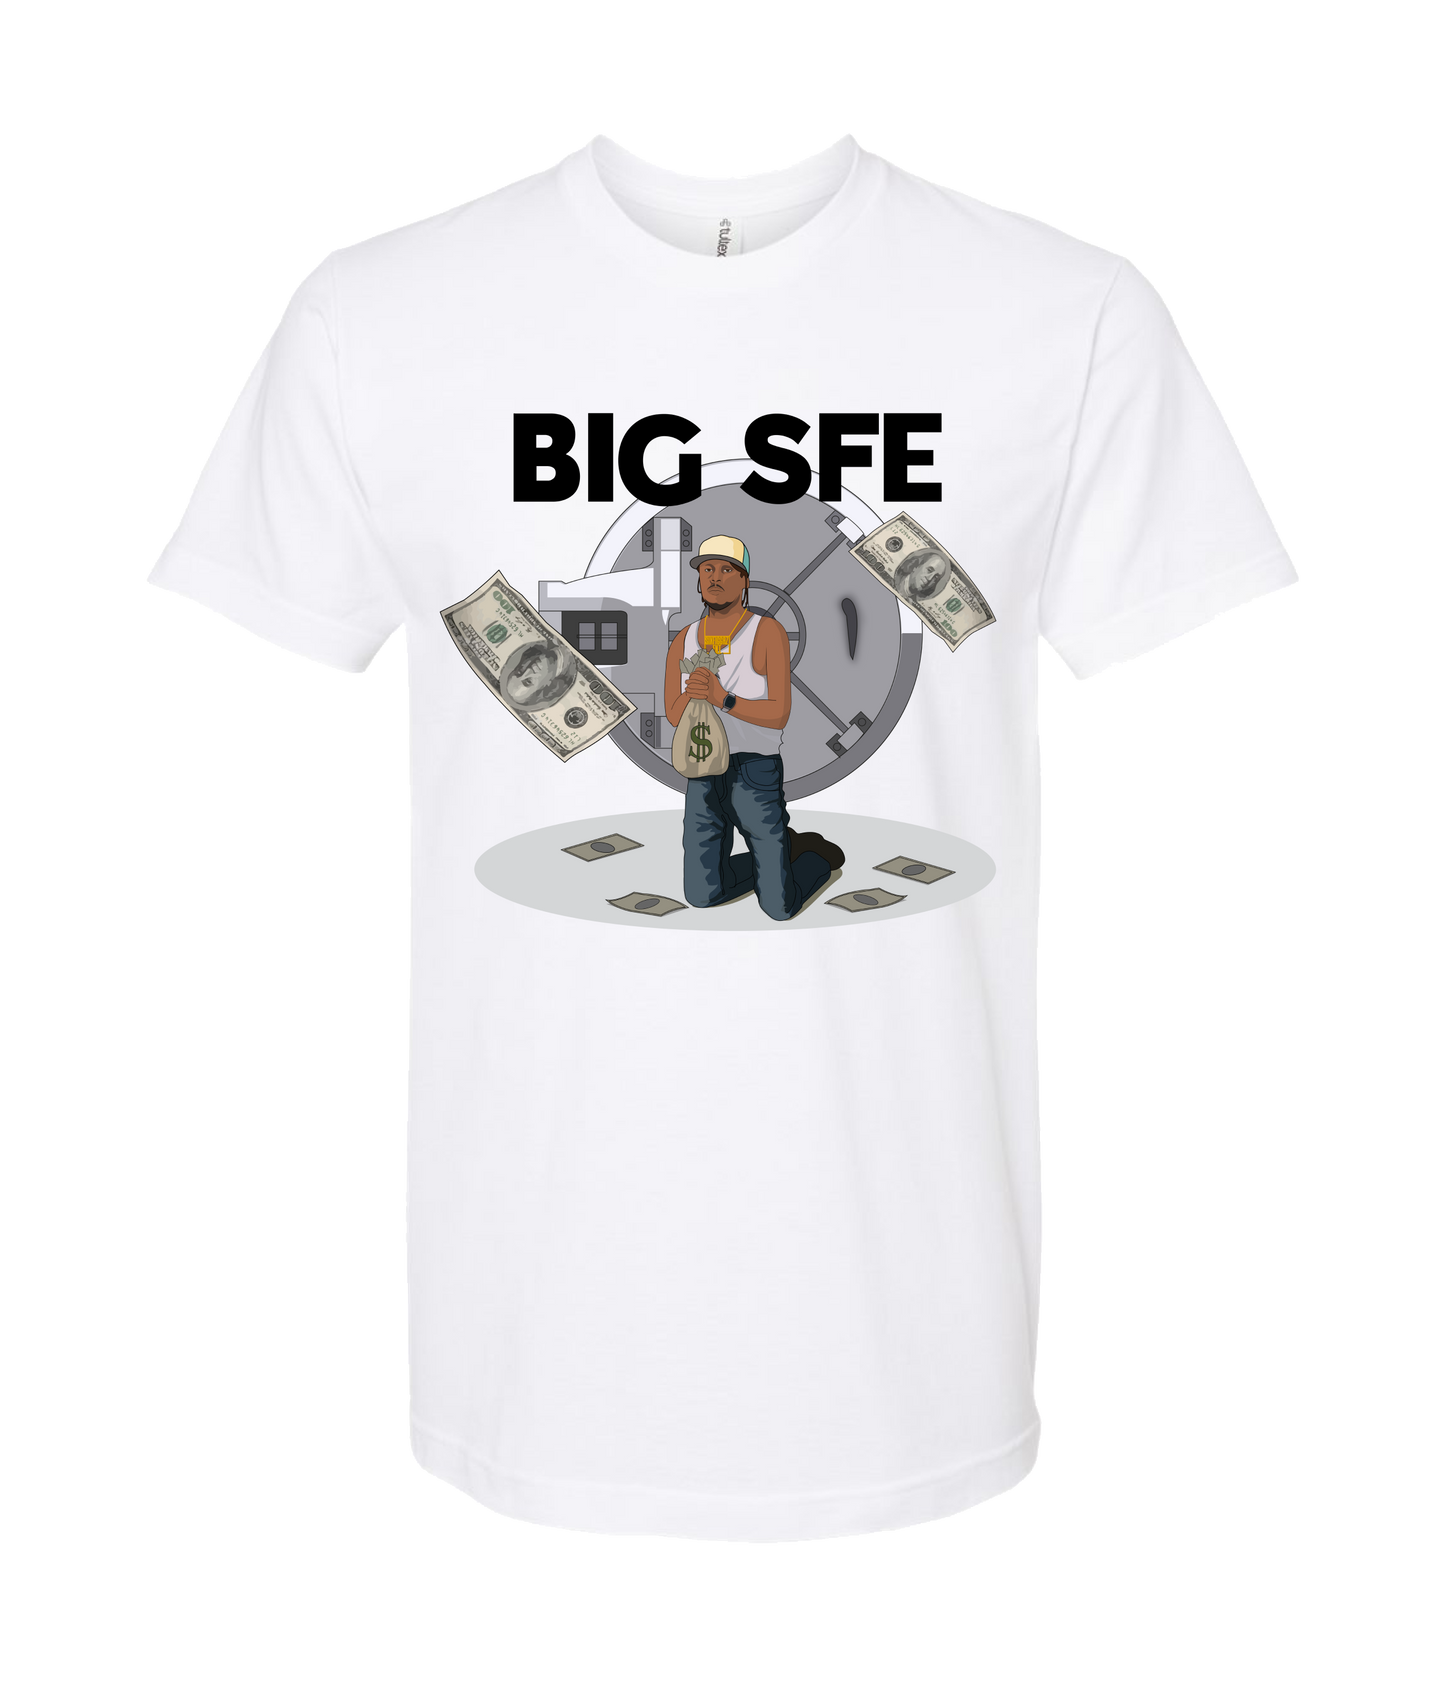 Thomas/Sfe_tdoug - BIG SFE - White T Shirt